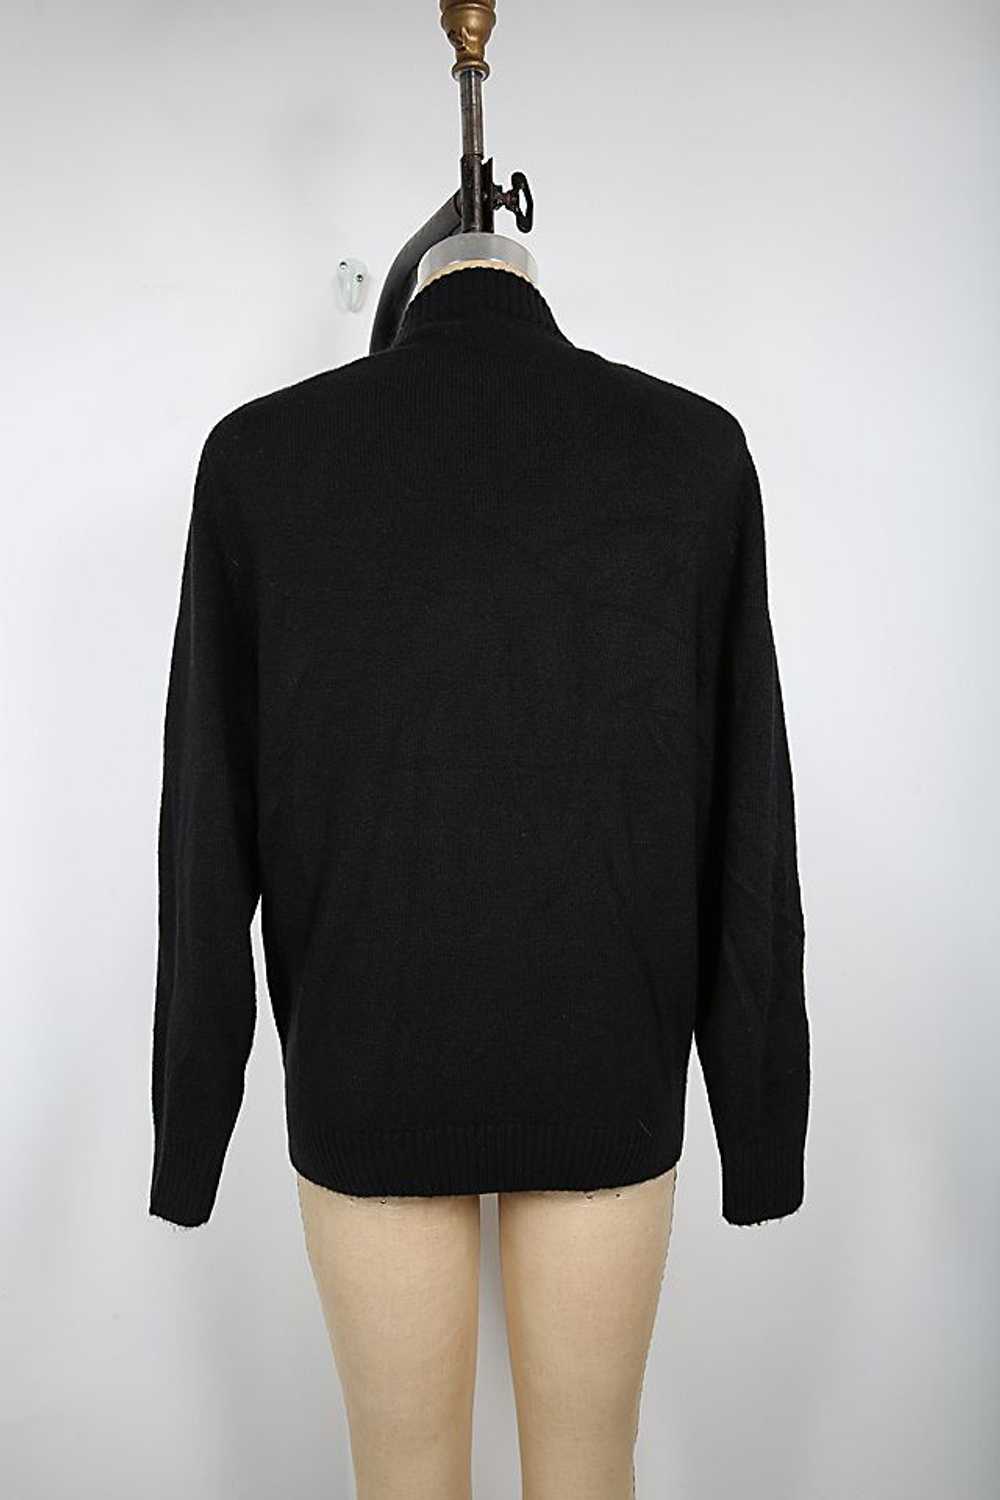 Vintage Black Embellished & Beaded Sweater Select… - image 4